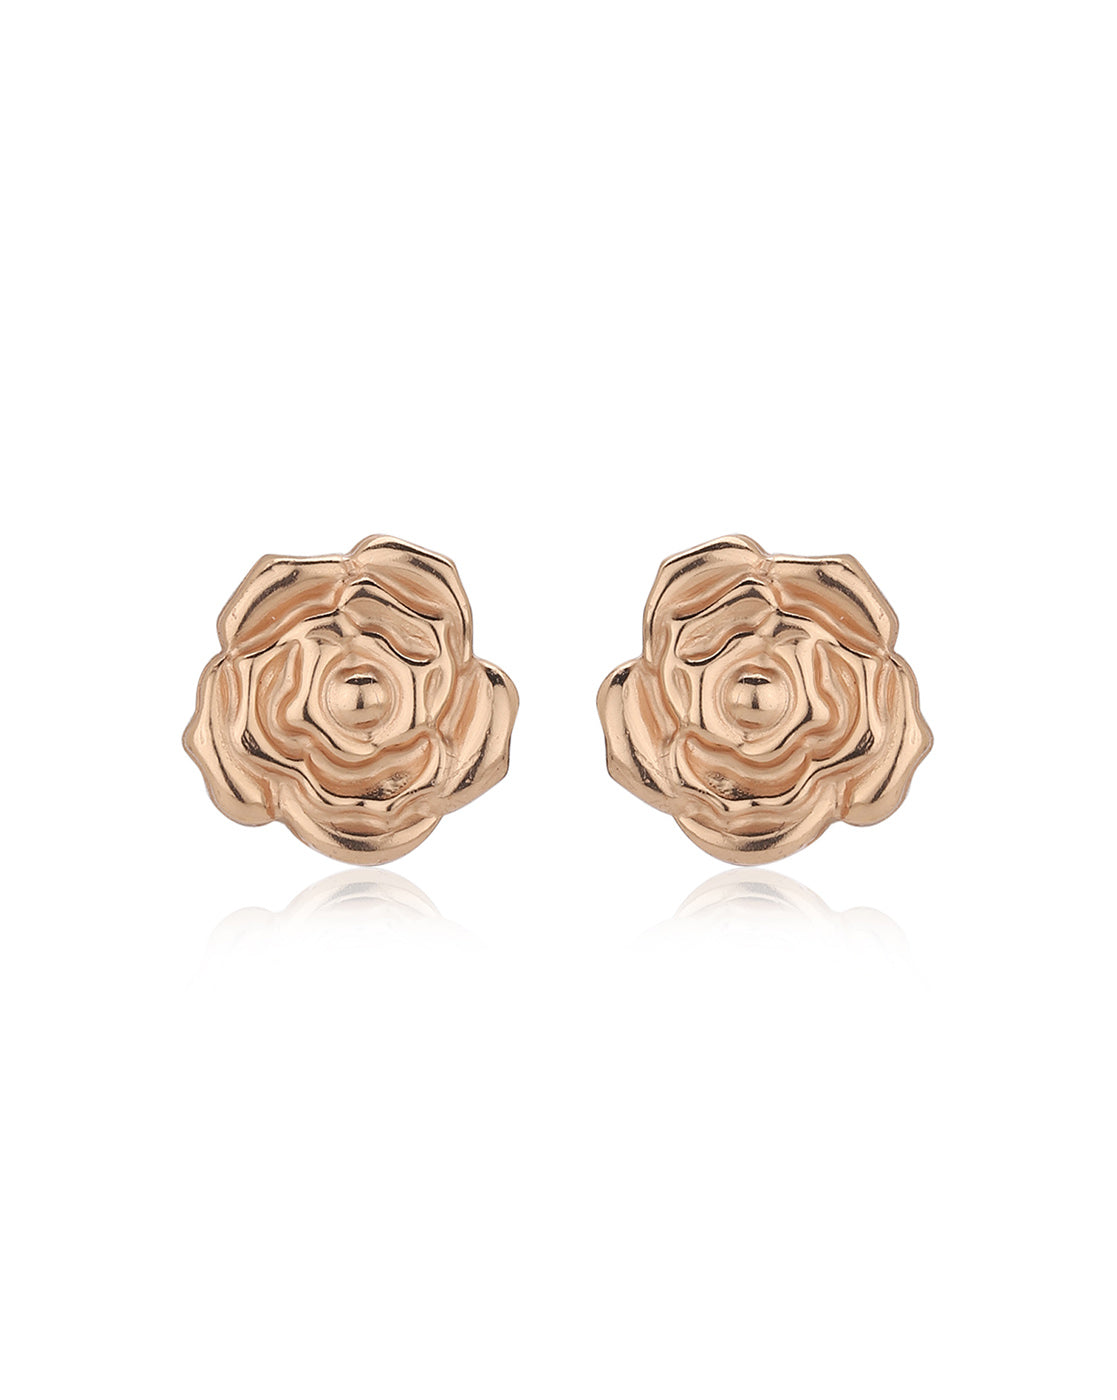 Carlton London 925 Sterling Silver Rose Gold Plated Rose Stud Earring For Women